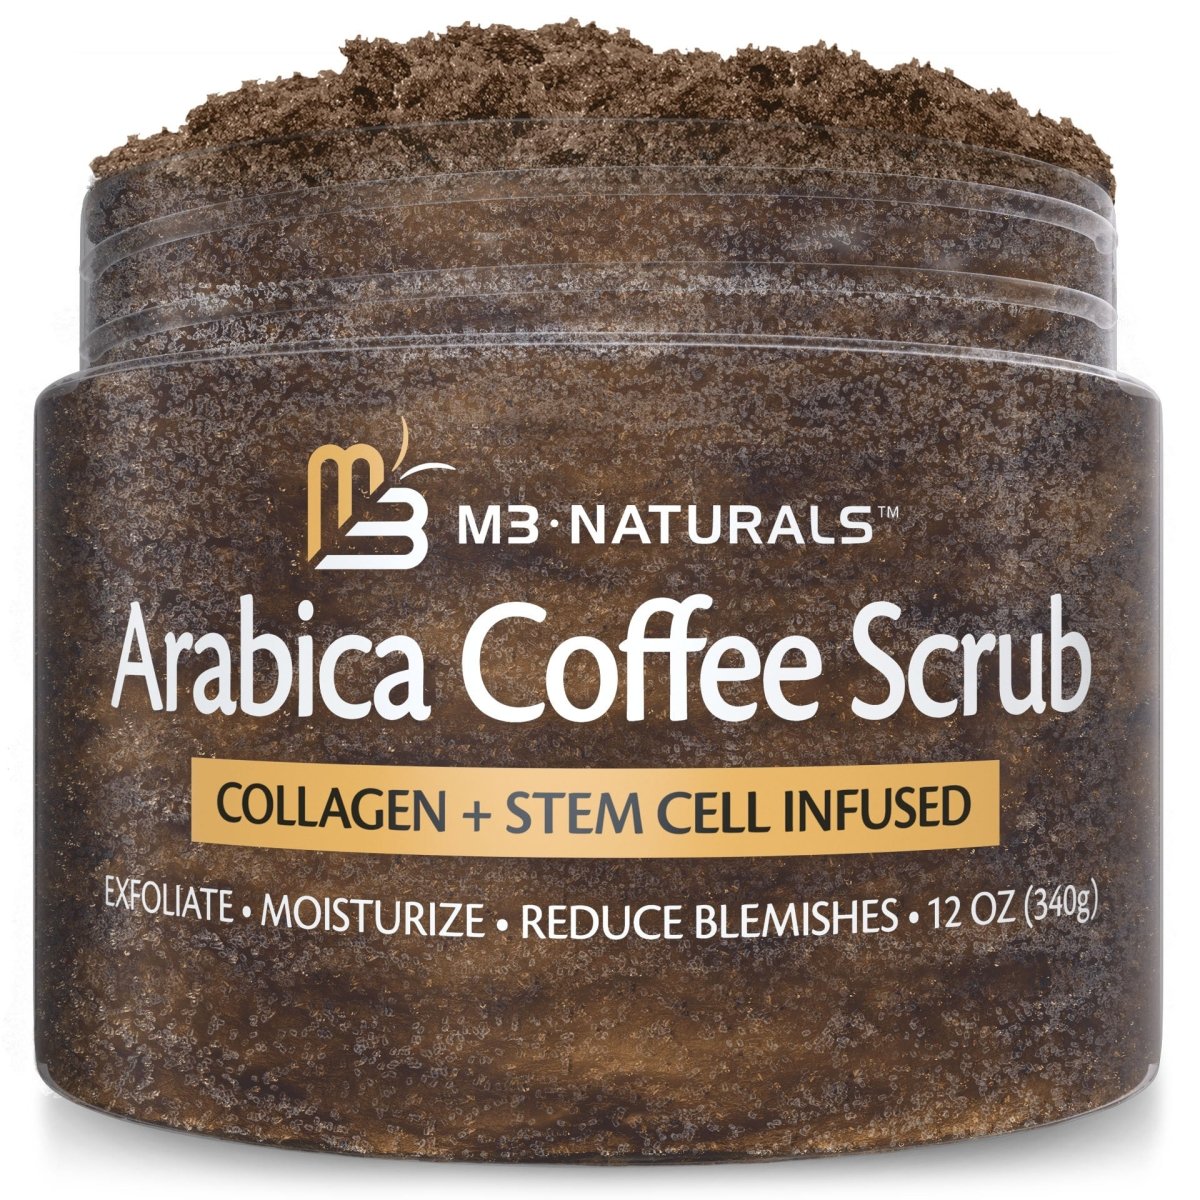 M3 Naturals Arabica Coffee Body Scrub Body Scrub amazon Arabica Coffee Scrub best body scrub